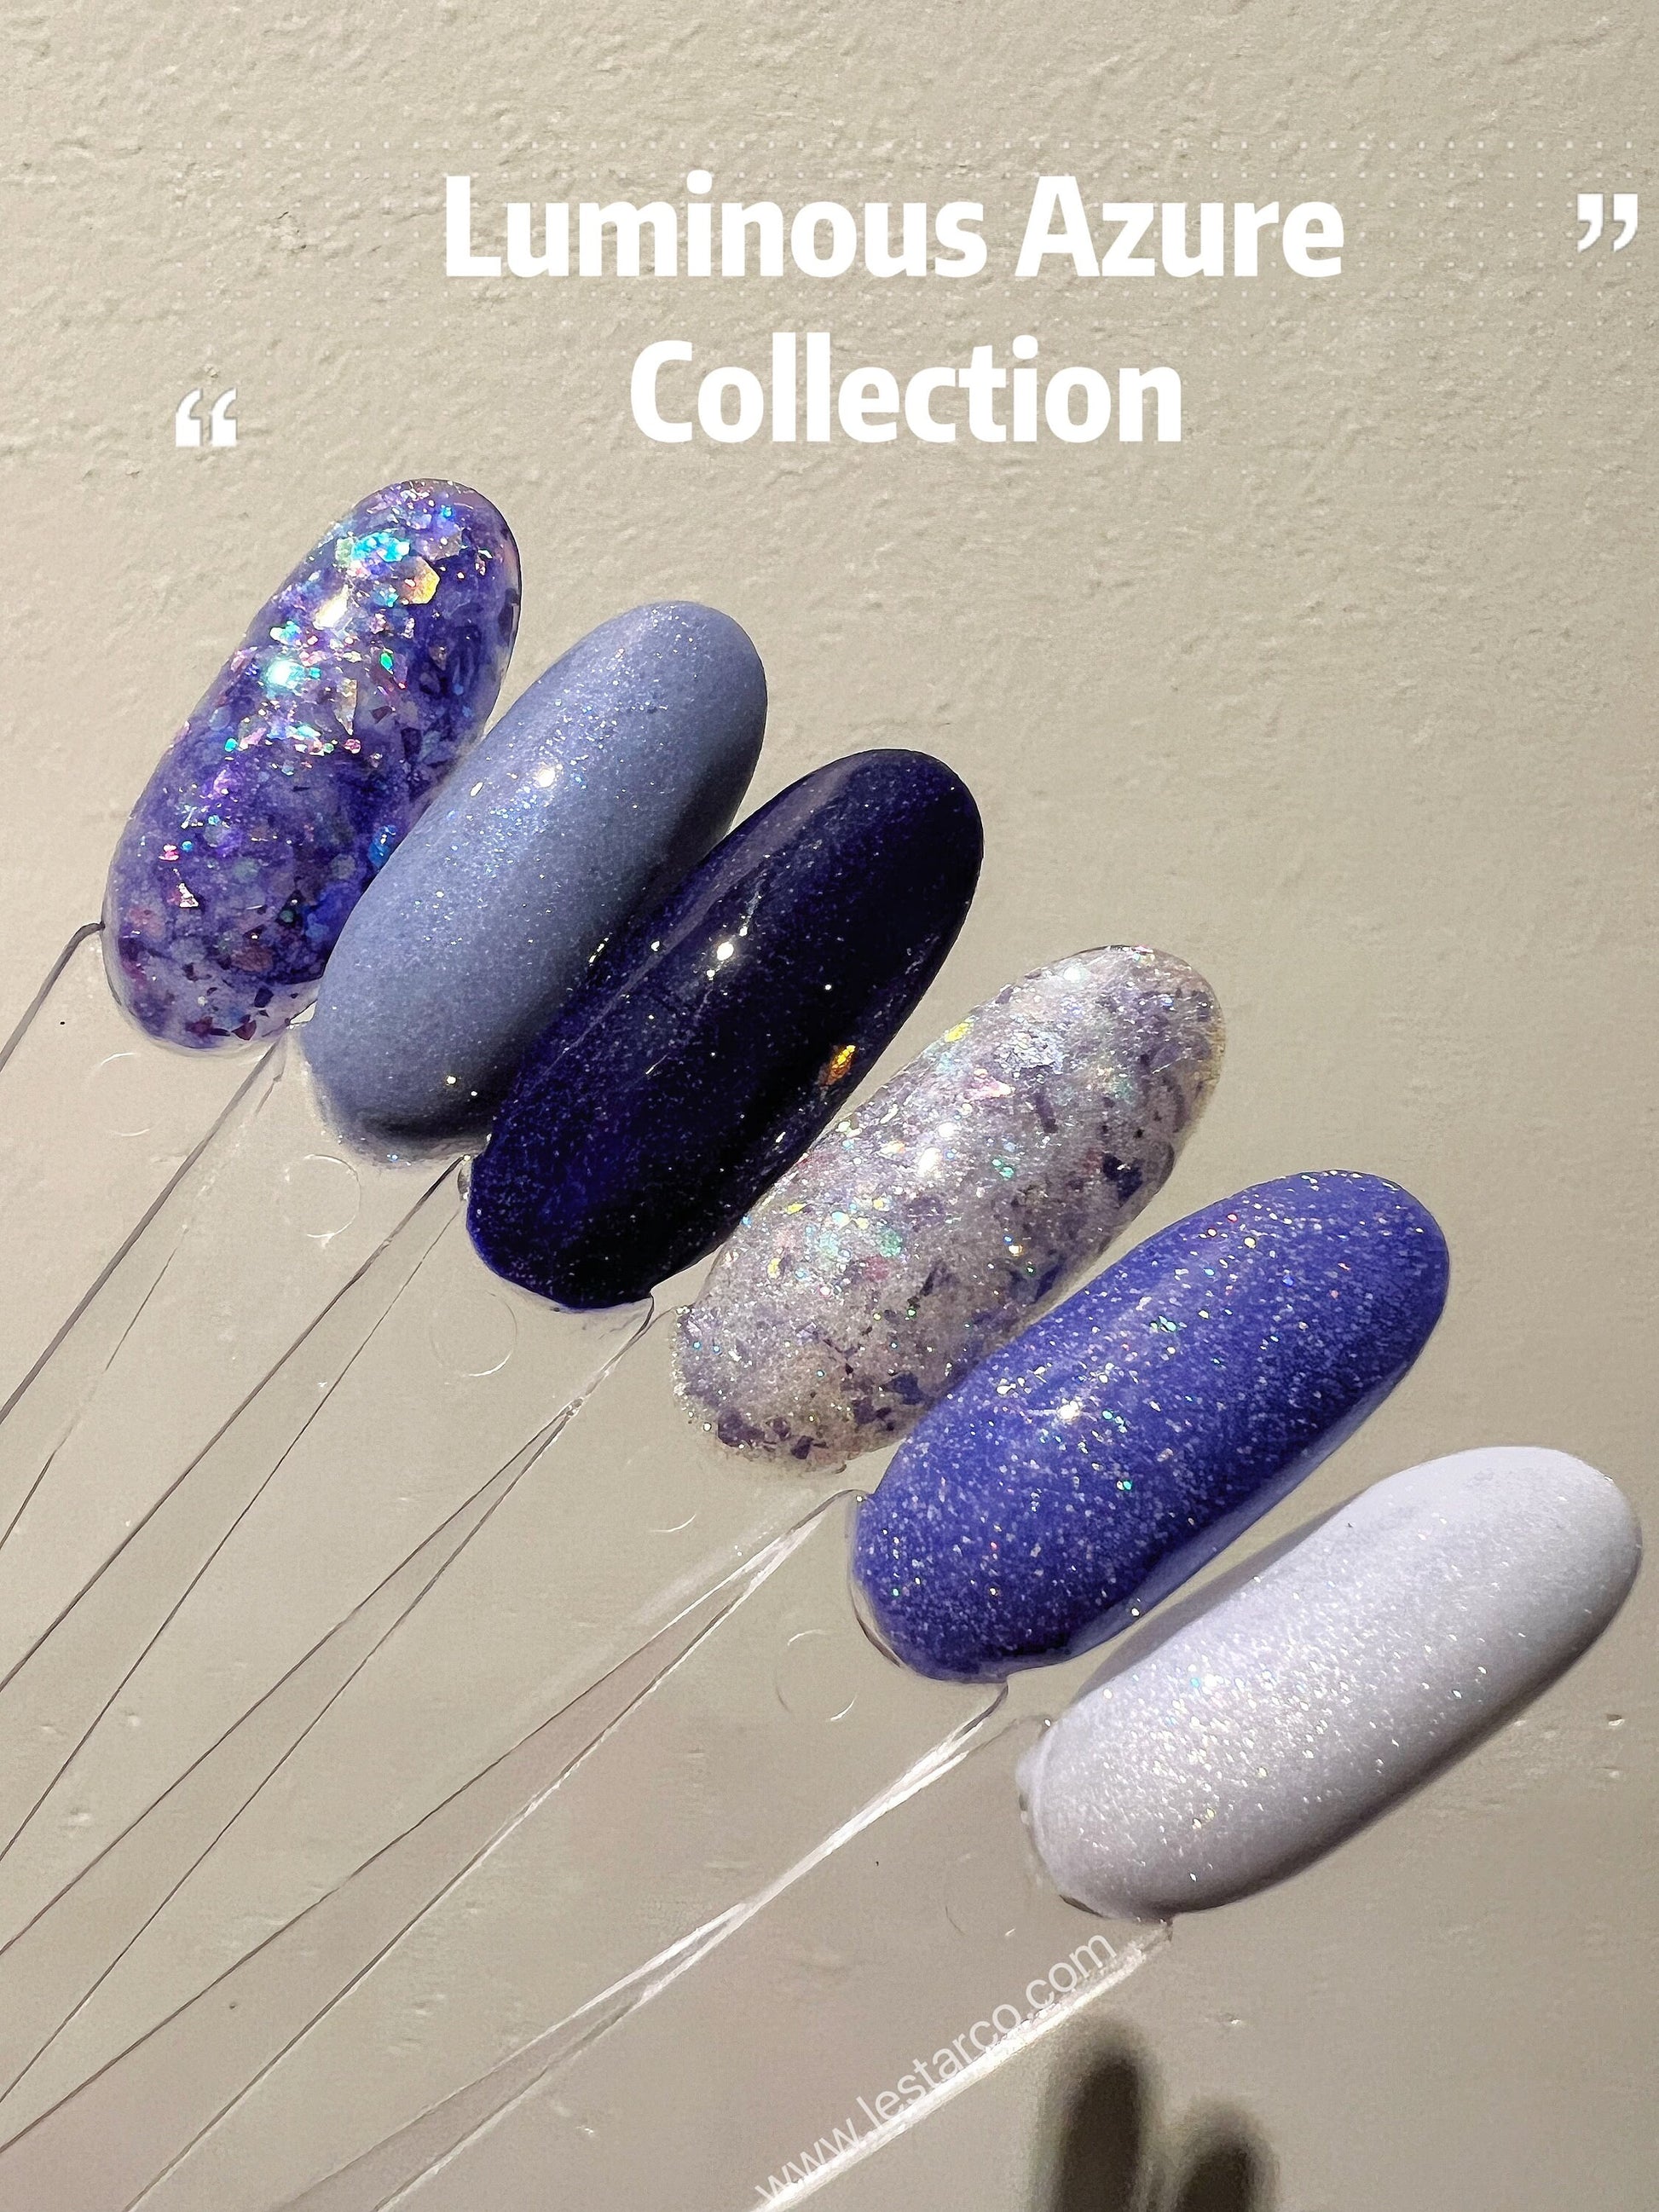 Brilliant Sky | Blue colour Shifting Glitter Gel Polish Ultra Shine Home Nail DIY False Tips Manicure Nail Art Supply By LUMIQO